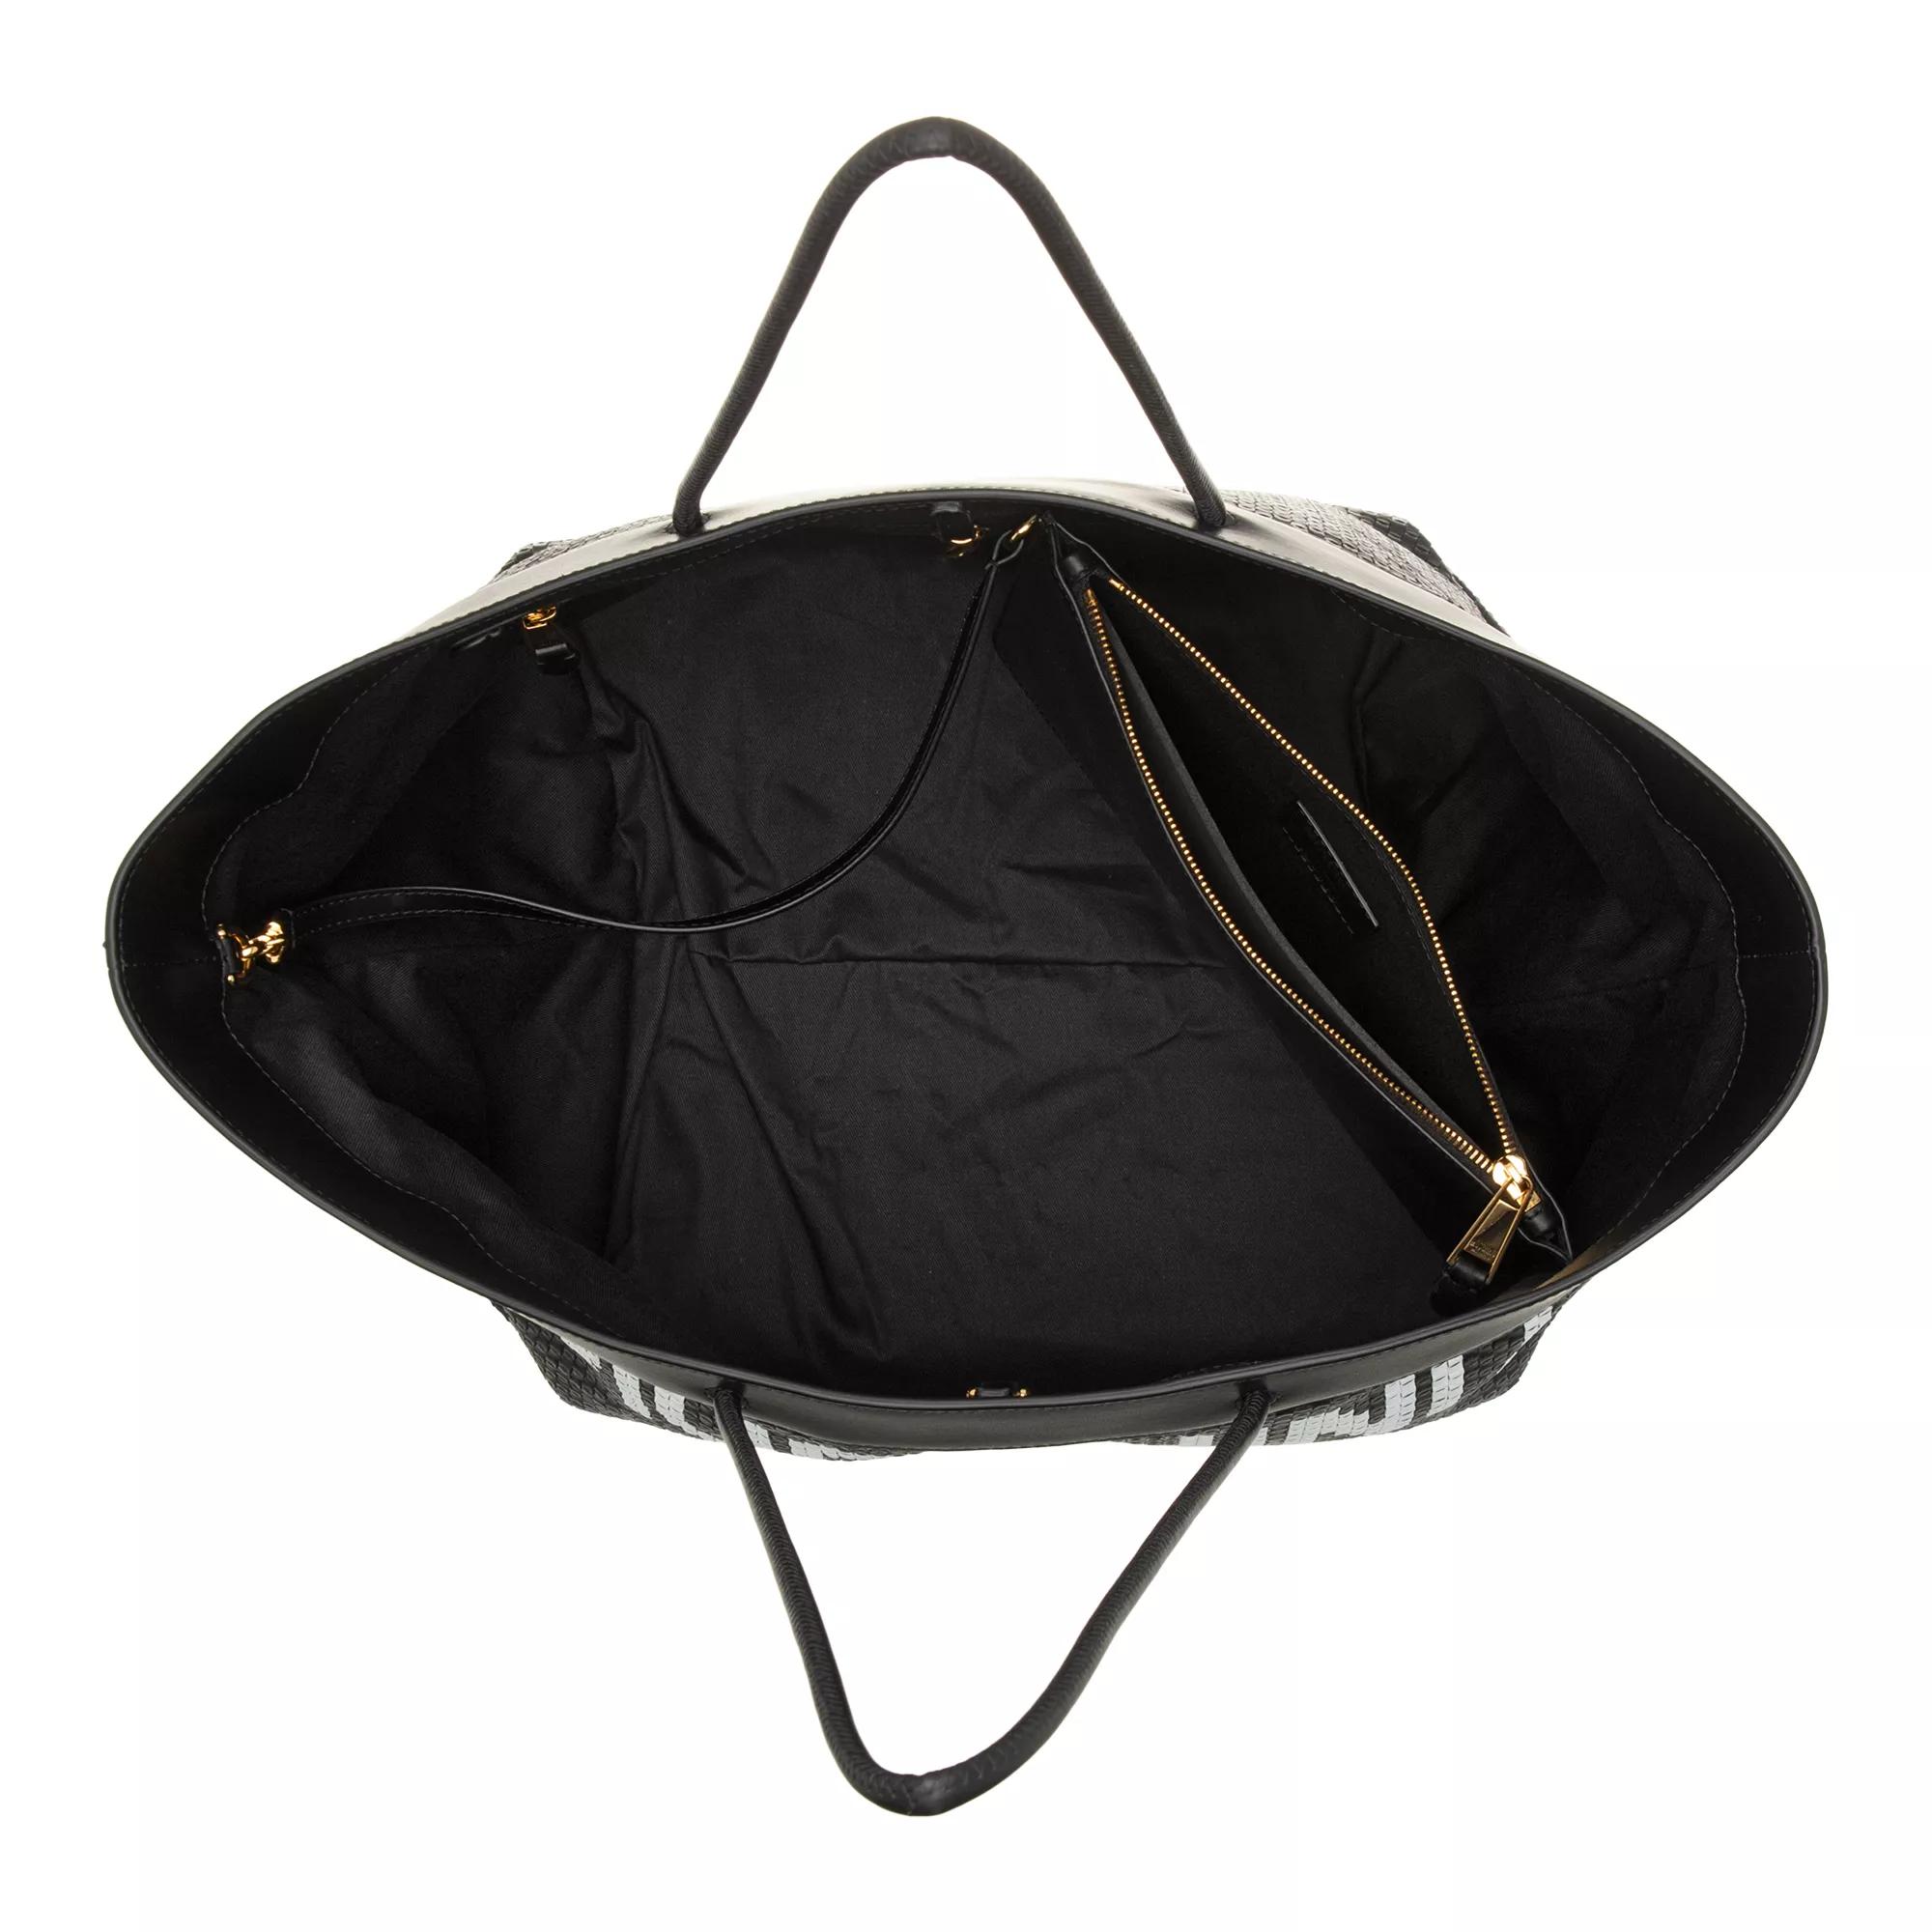 Moschino Shoppers Black & White Shoulder Bag in zwart